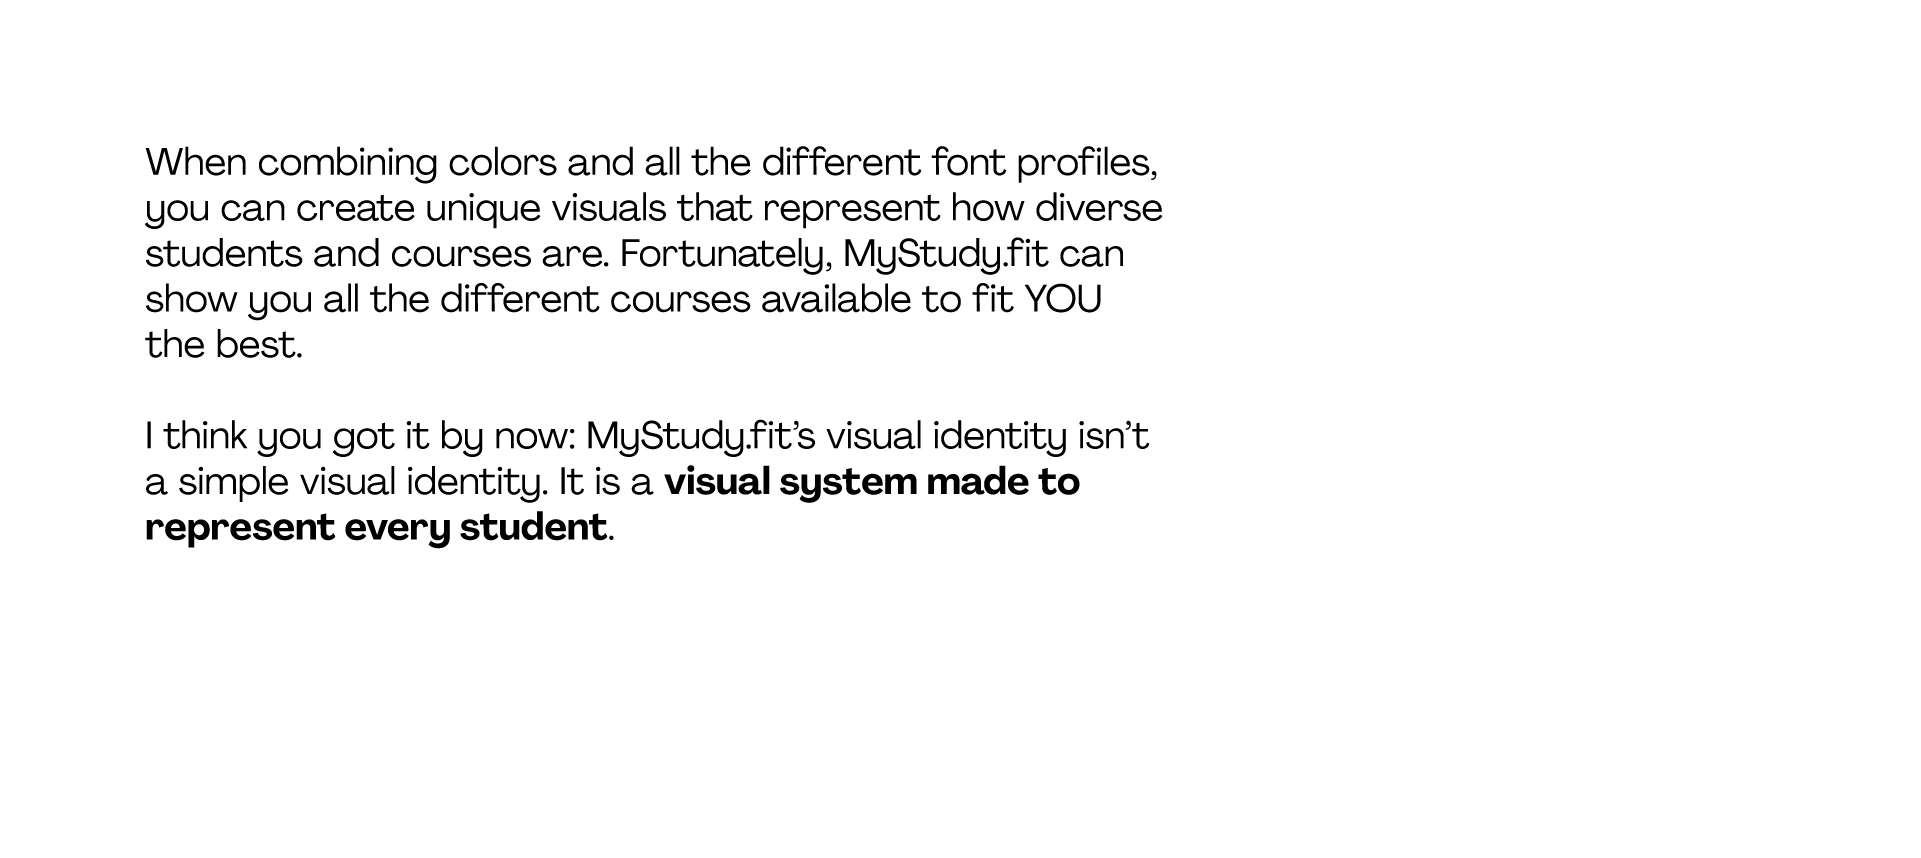 MyStudyFit Visual Identity - House Of Education - Graphic Design - Art Direction - 2020 © Morgan Gomez and Sebastian von Bishopink